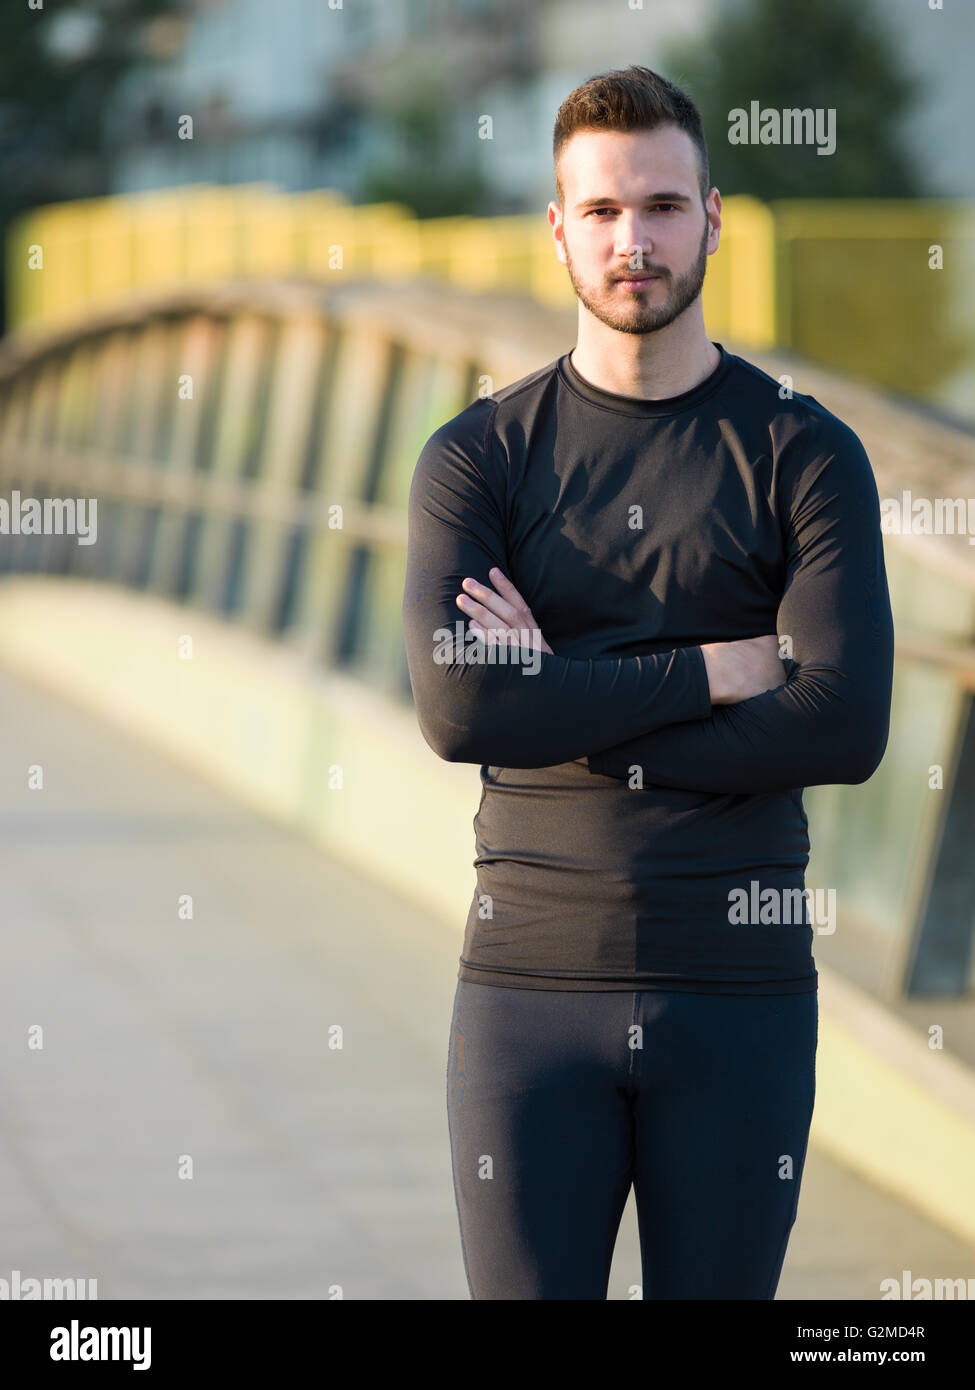 Jogger on a bridge Stock Photo - Alamy